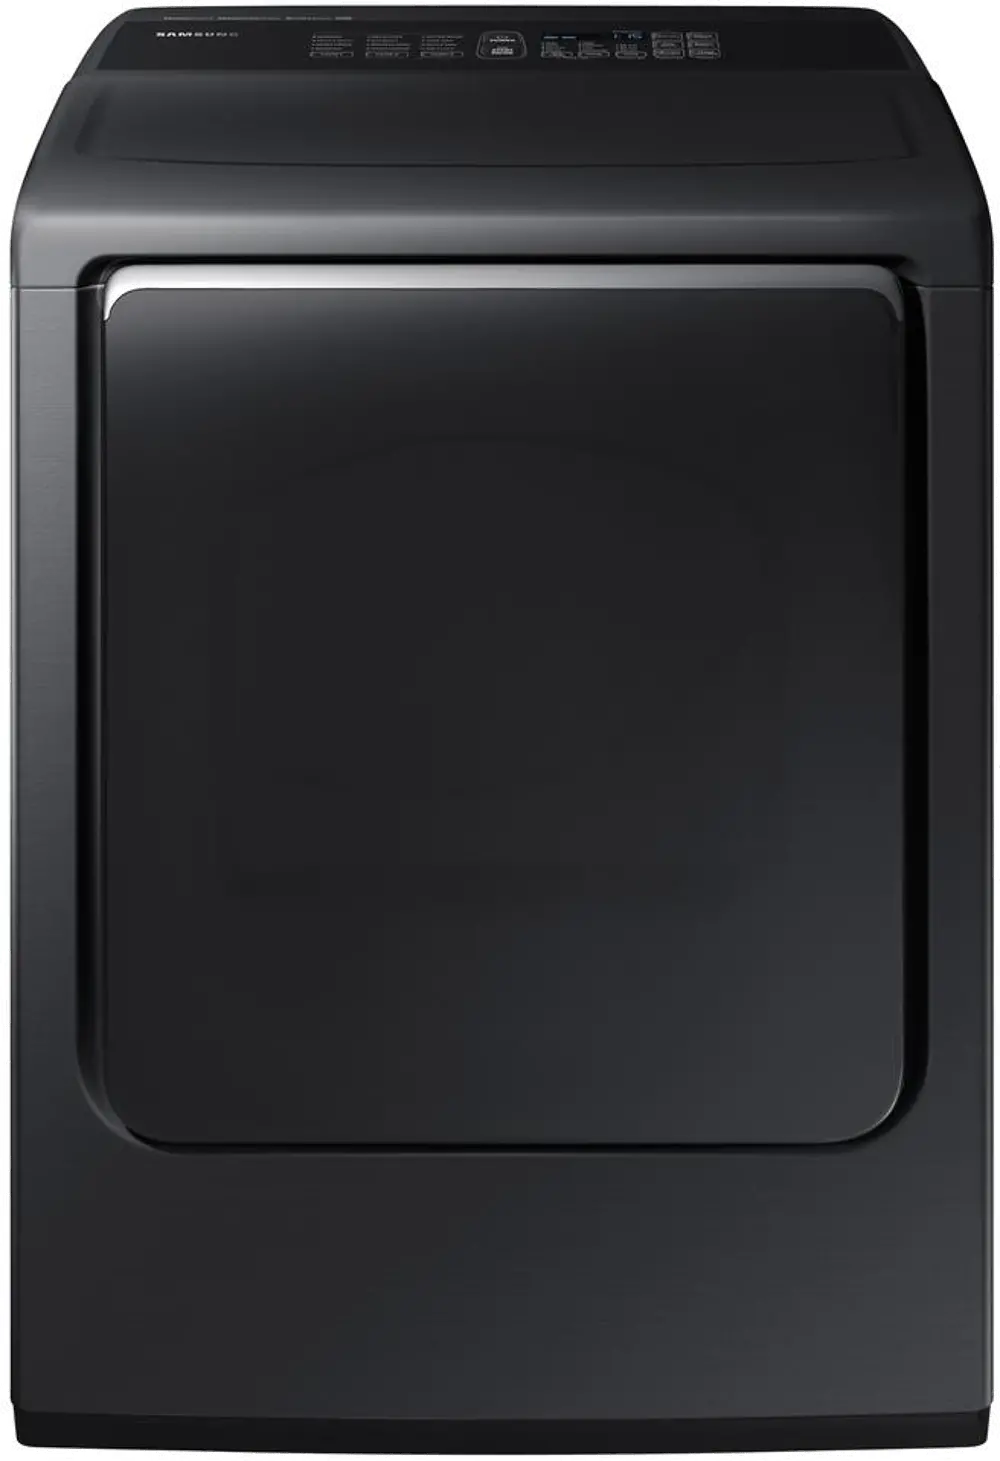 DVE52M8650V Samsung Electric Dryer with Multi-Steam Technology - 7.4 cu. ft. Black-1